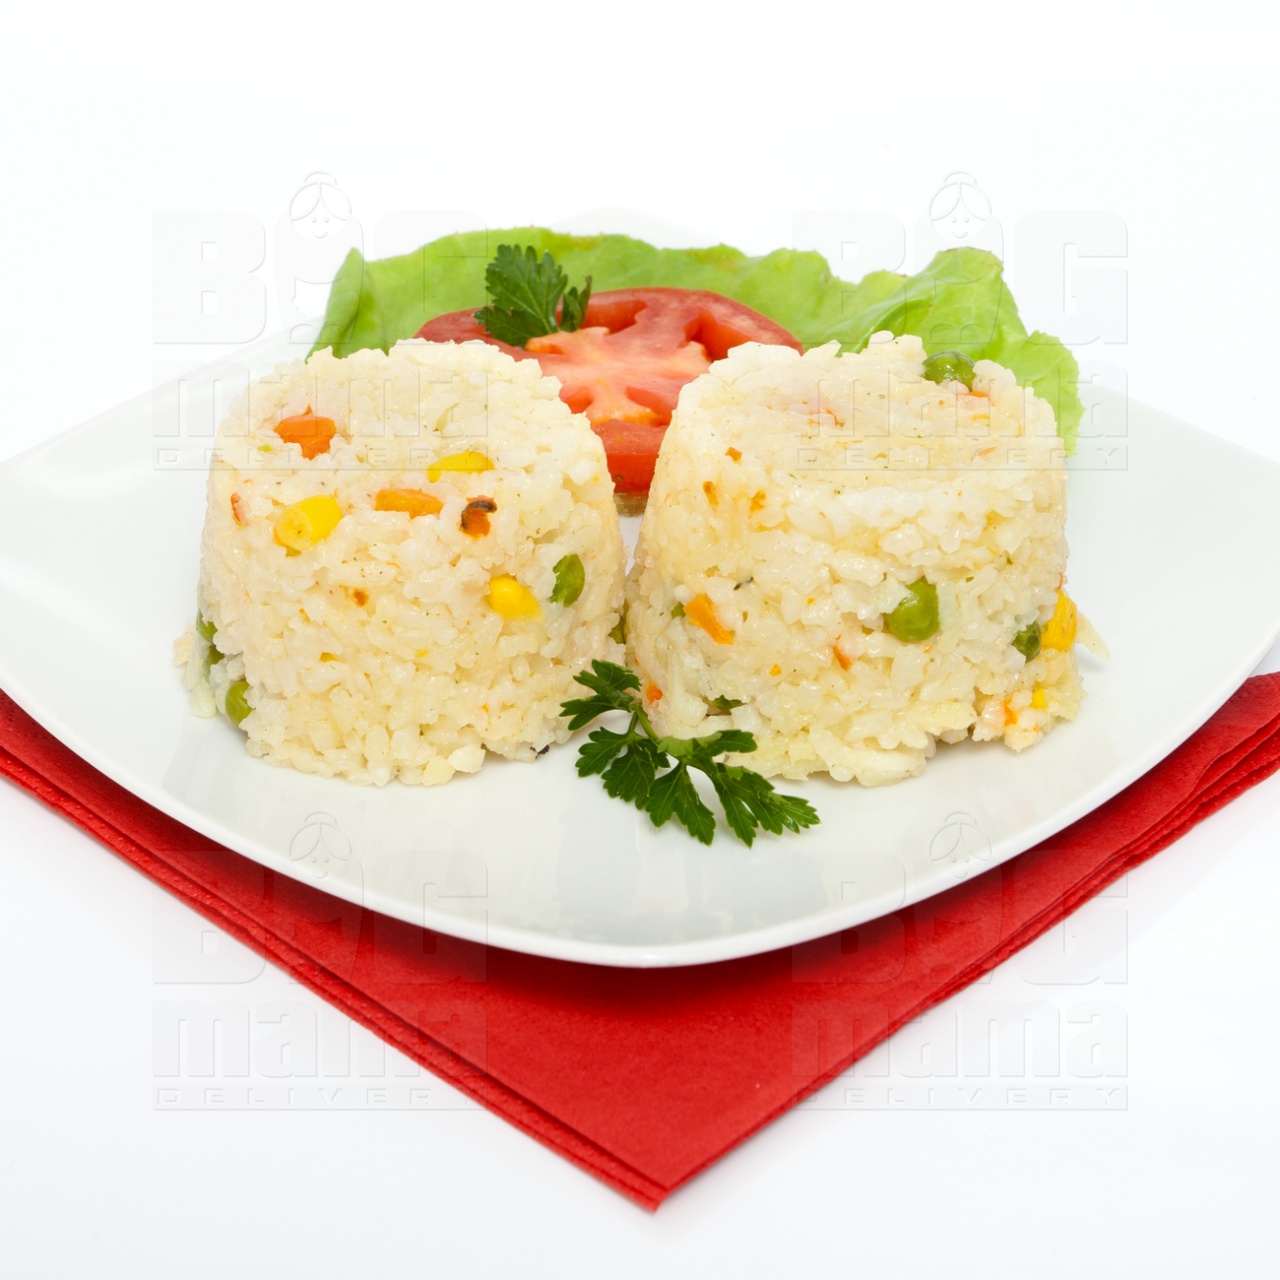 Product #184 image - Zöldséges rizs, fél adag